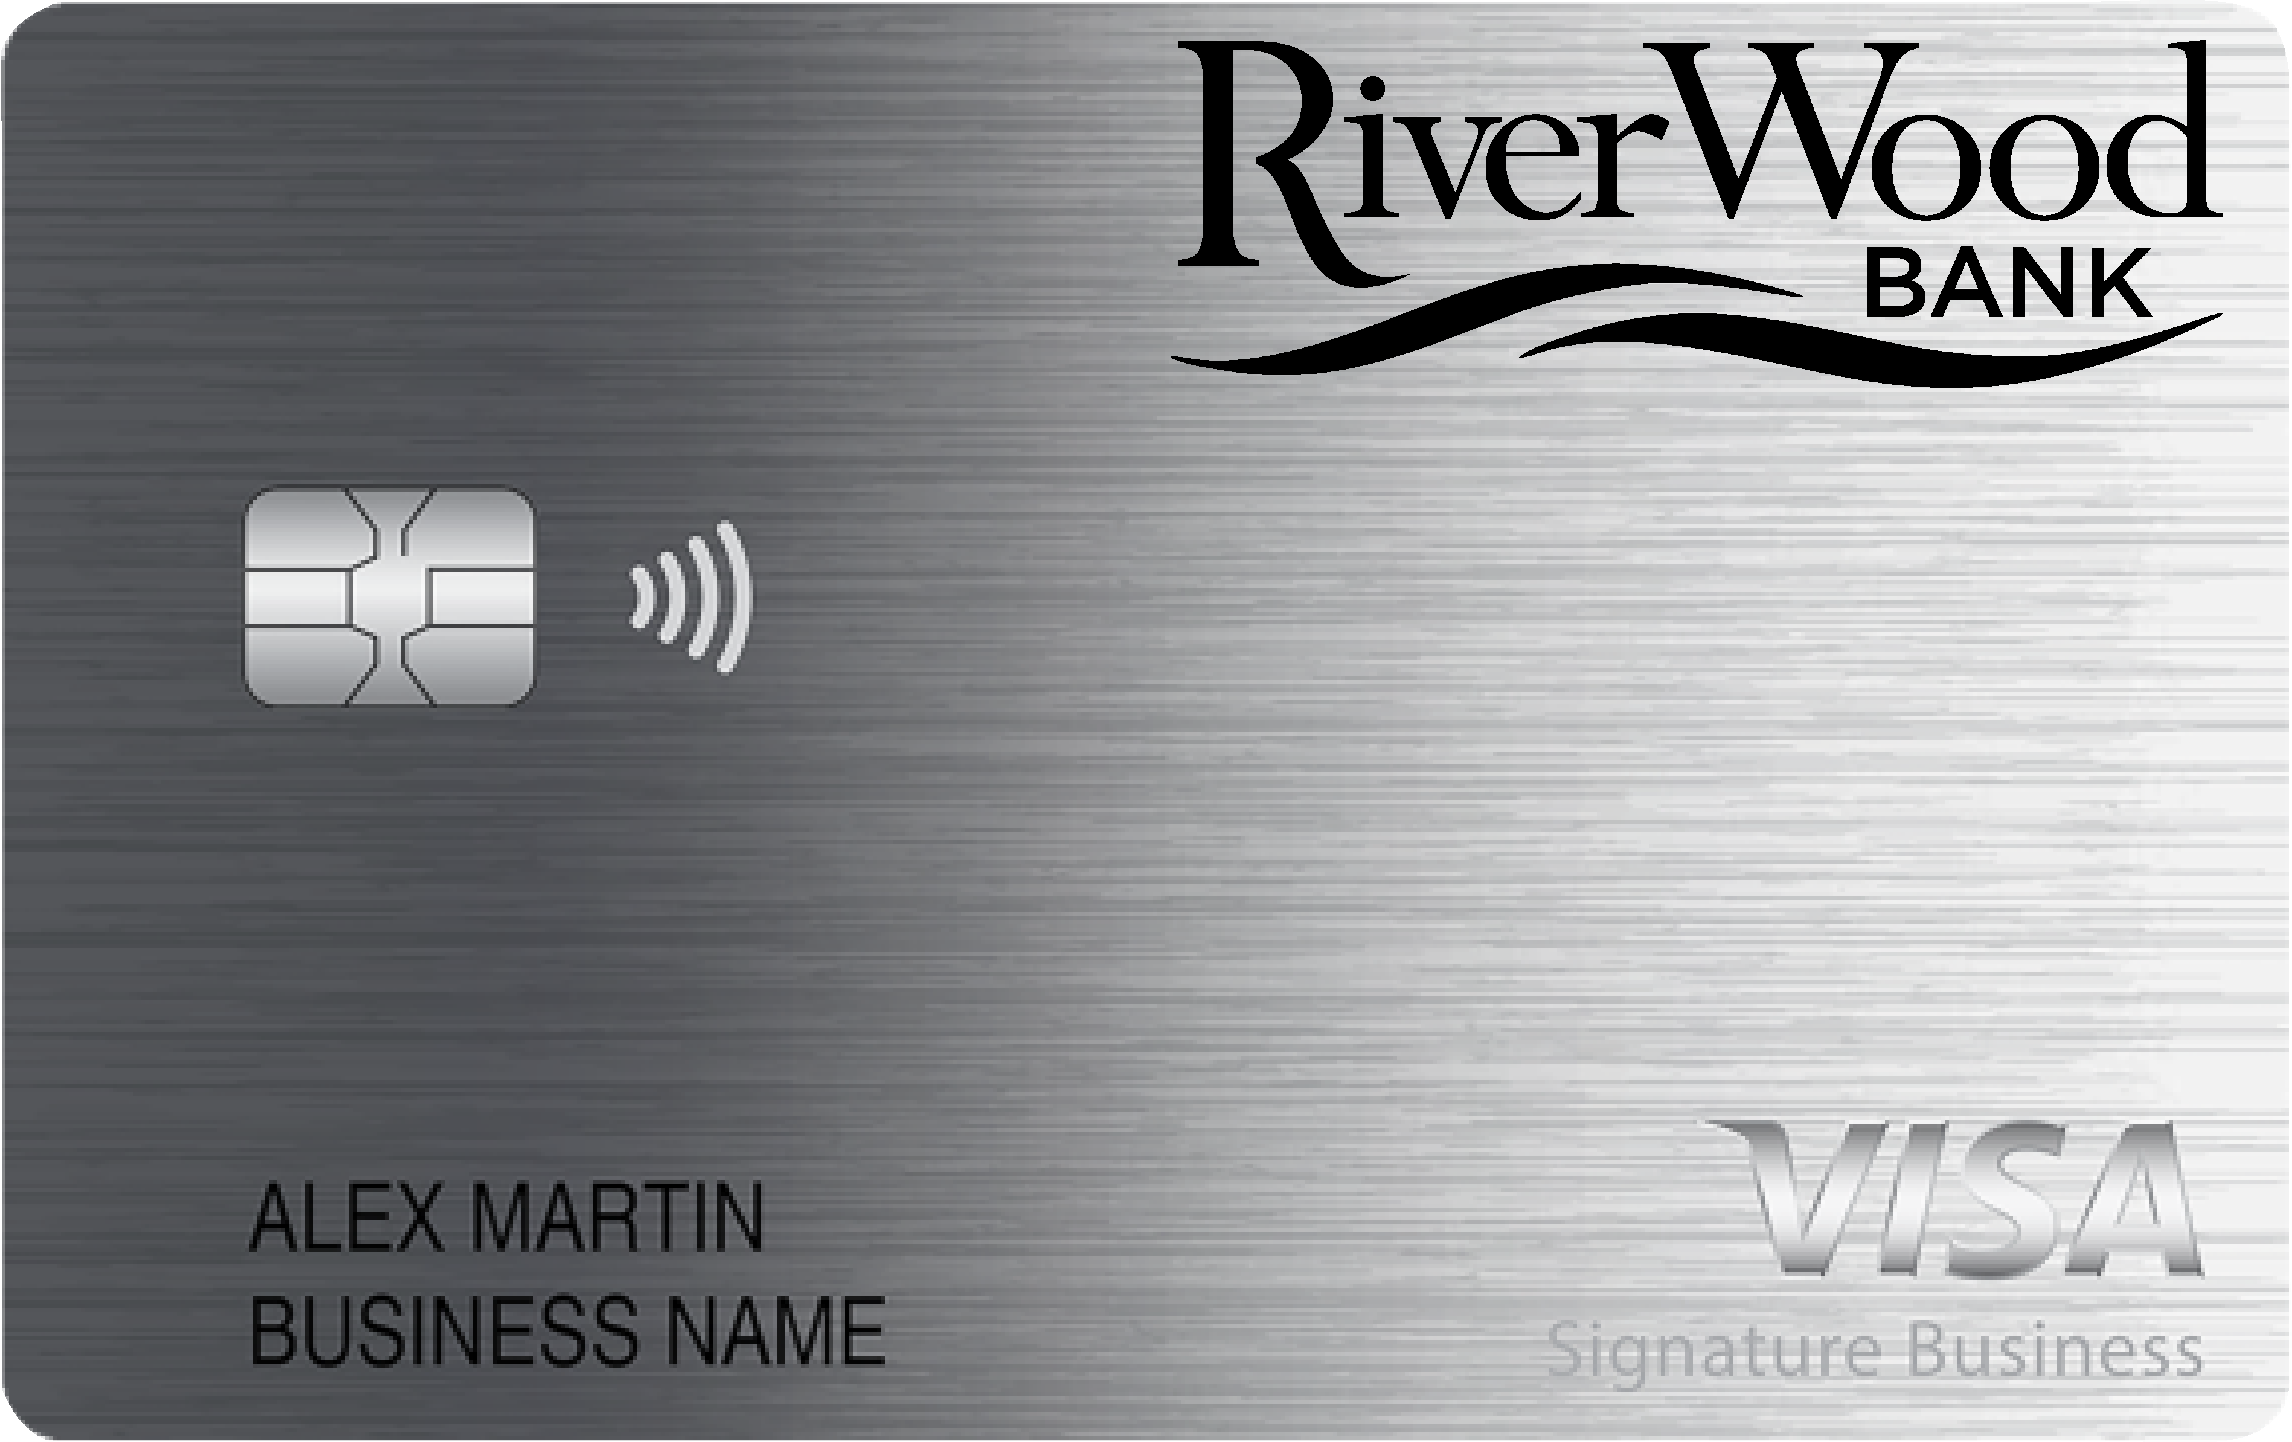 RiverWood Bank Smart Business Rewards Card